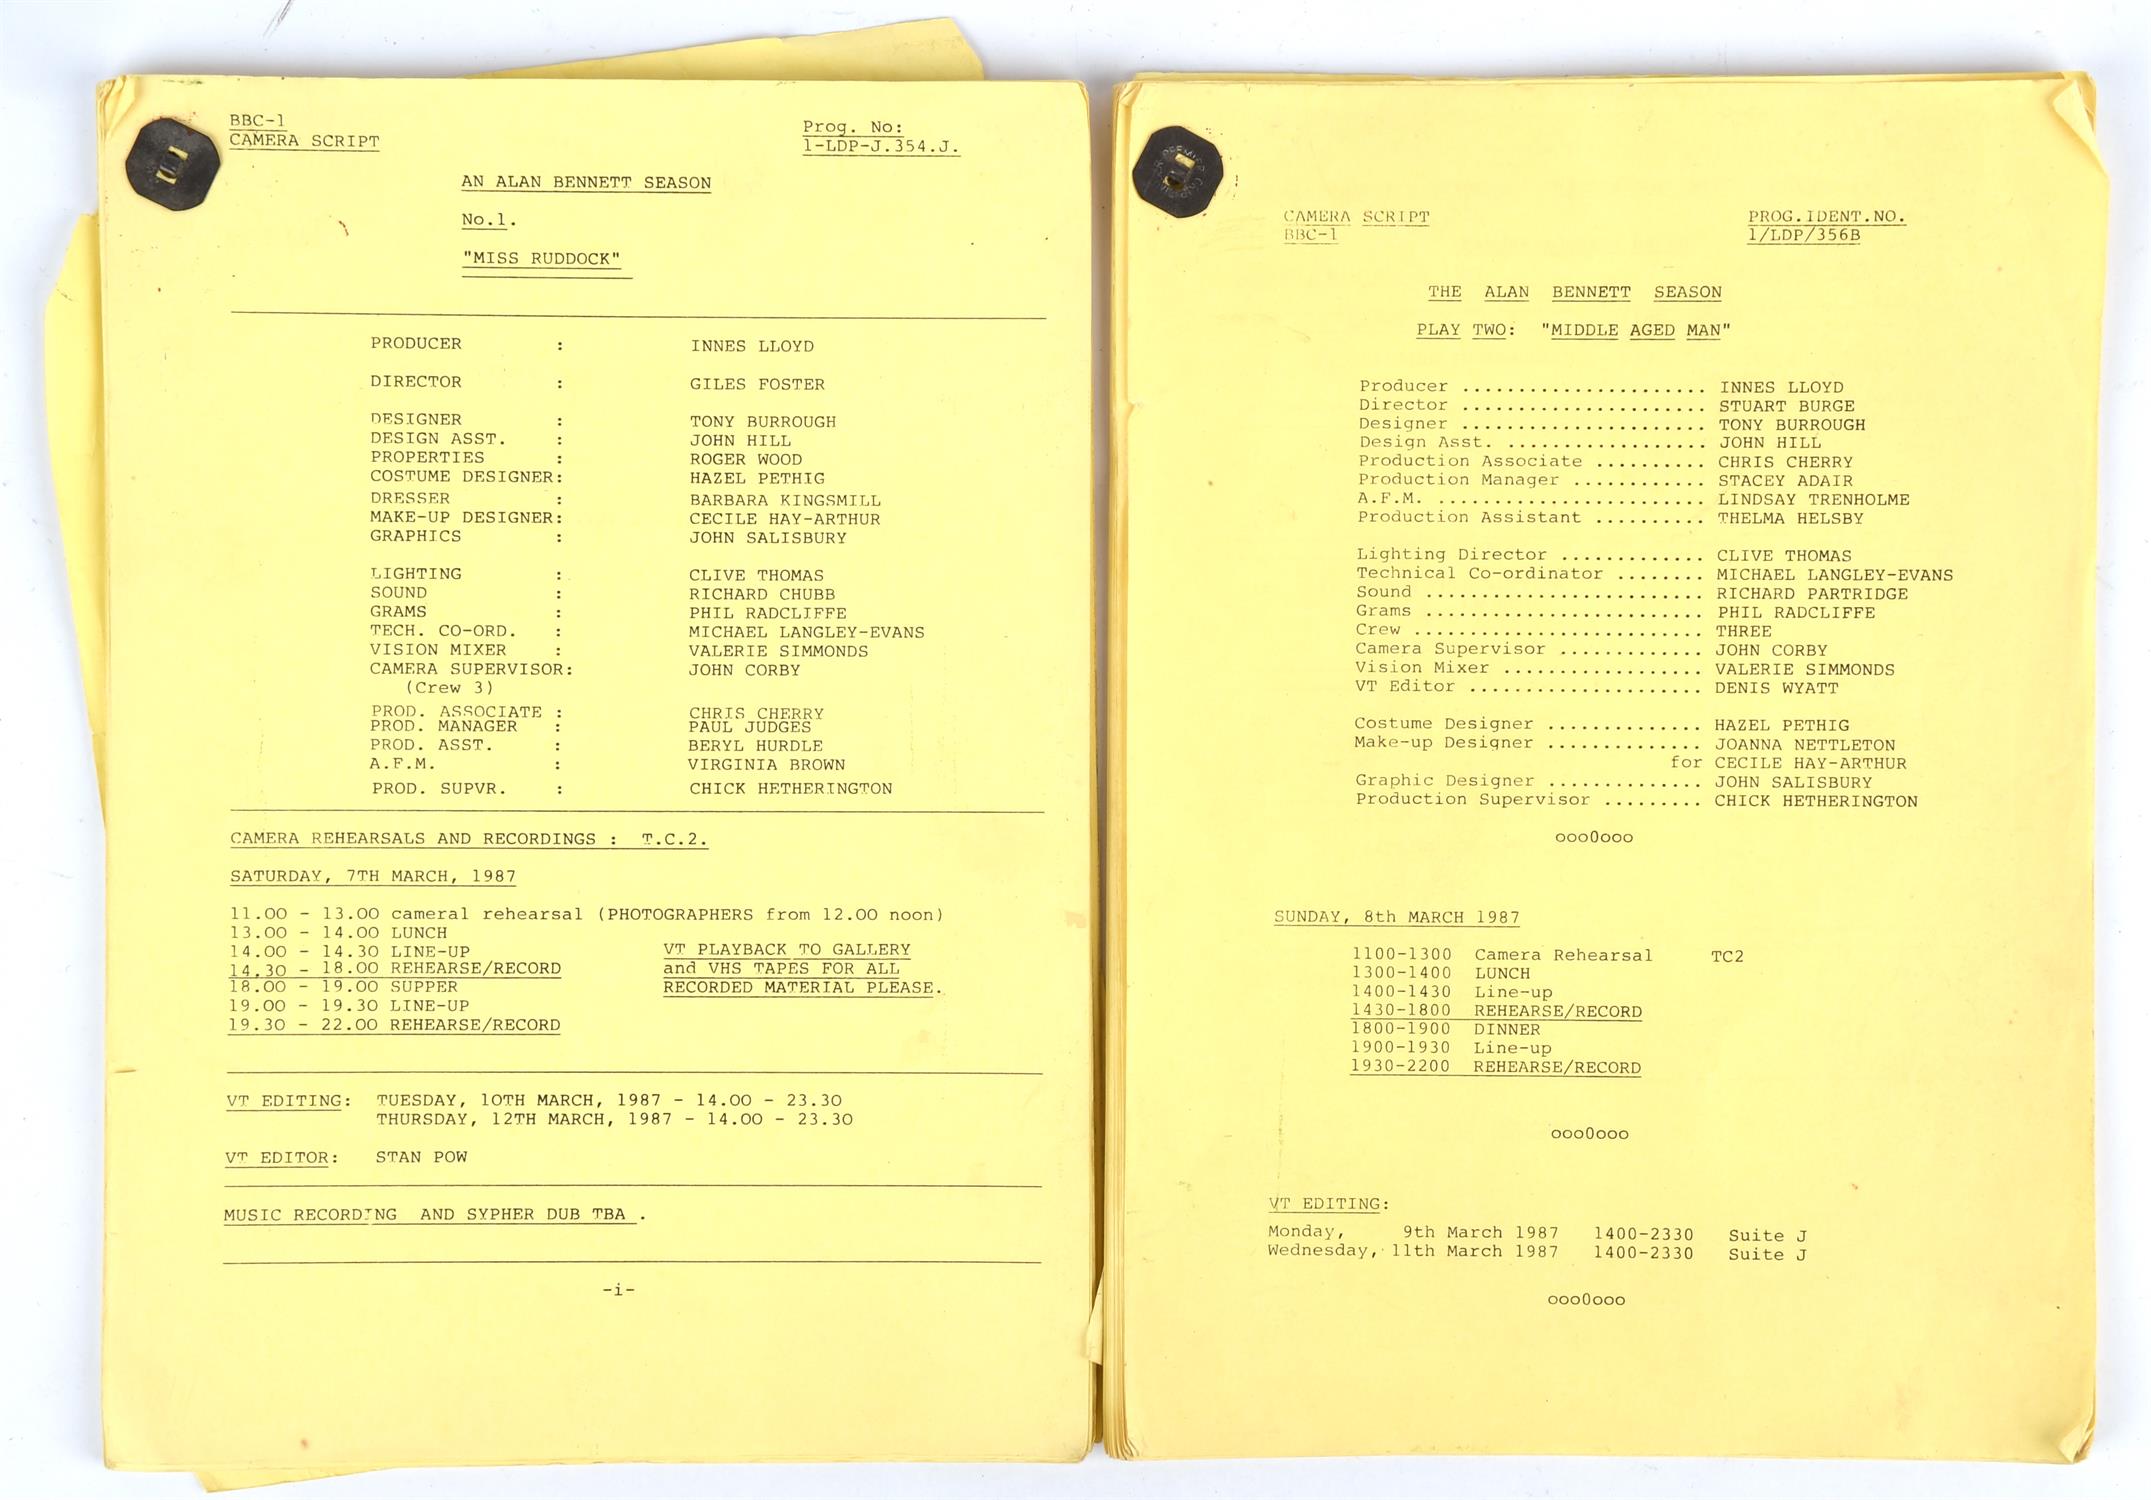 The Alan Bennett Season: [Talking Heads BBC TV series, 1988]. Two Original Camera Scripts for